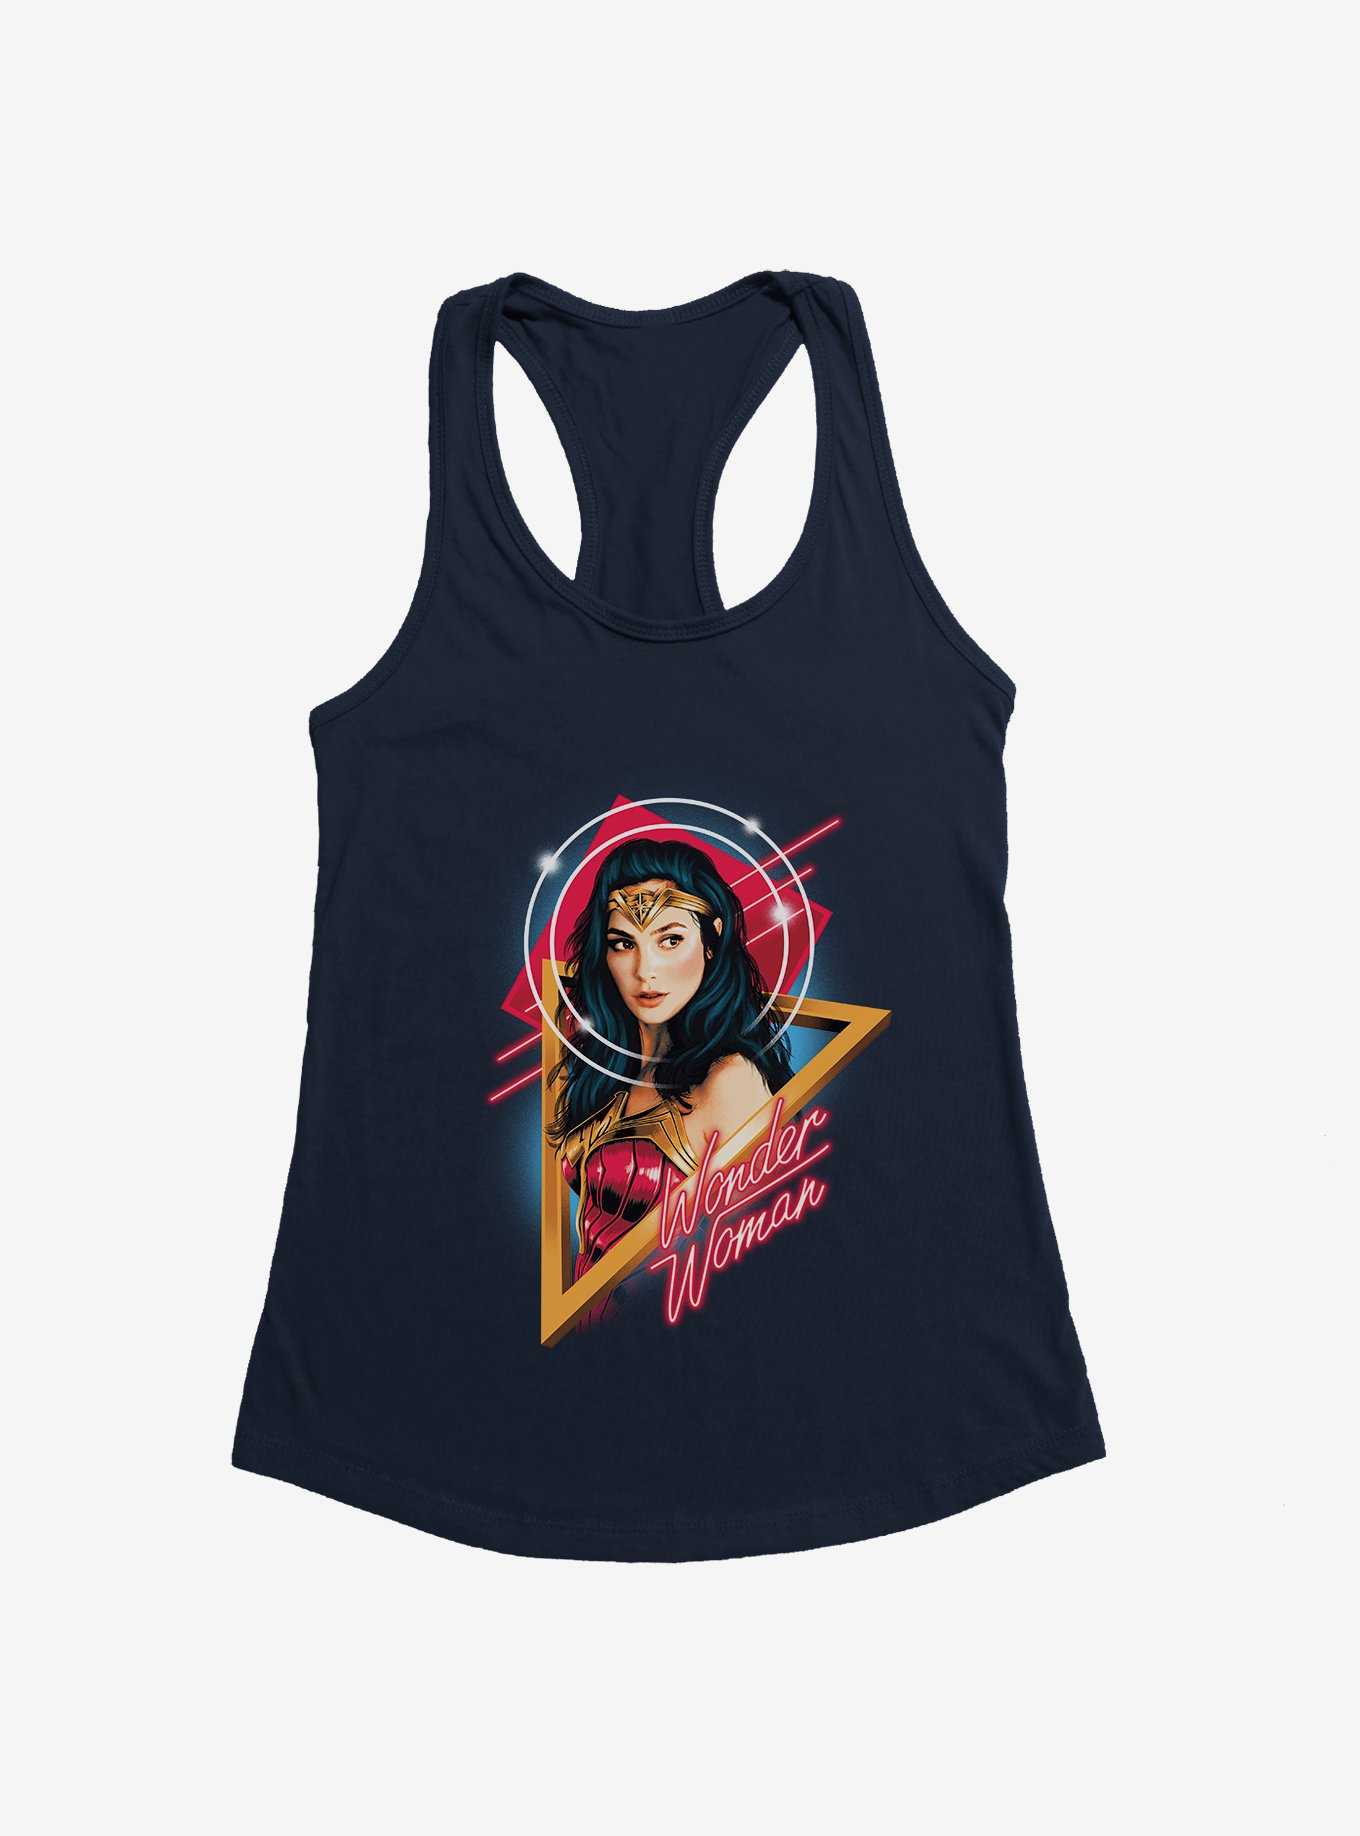 Wonder Woman Vintage Jumper, Official DC Merch